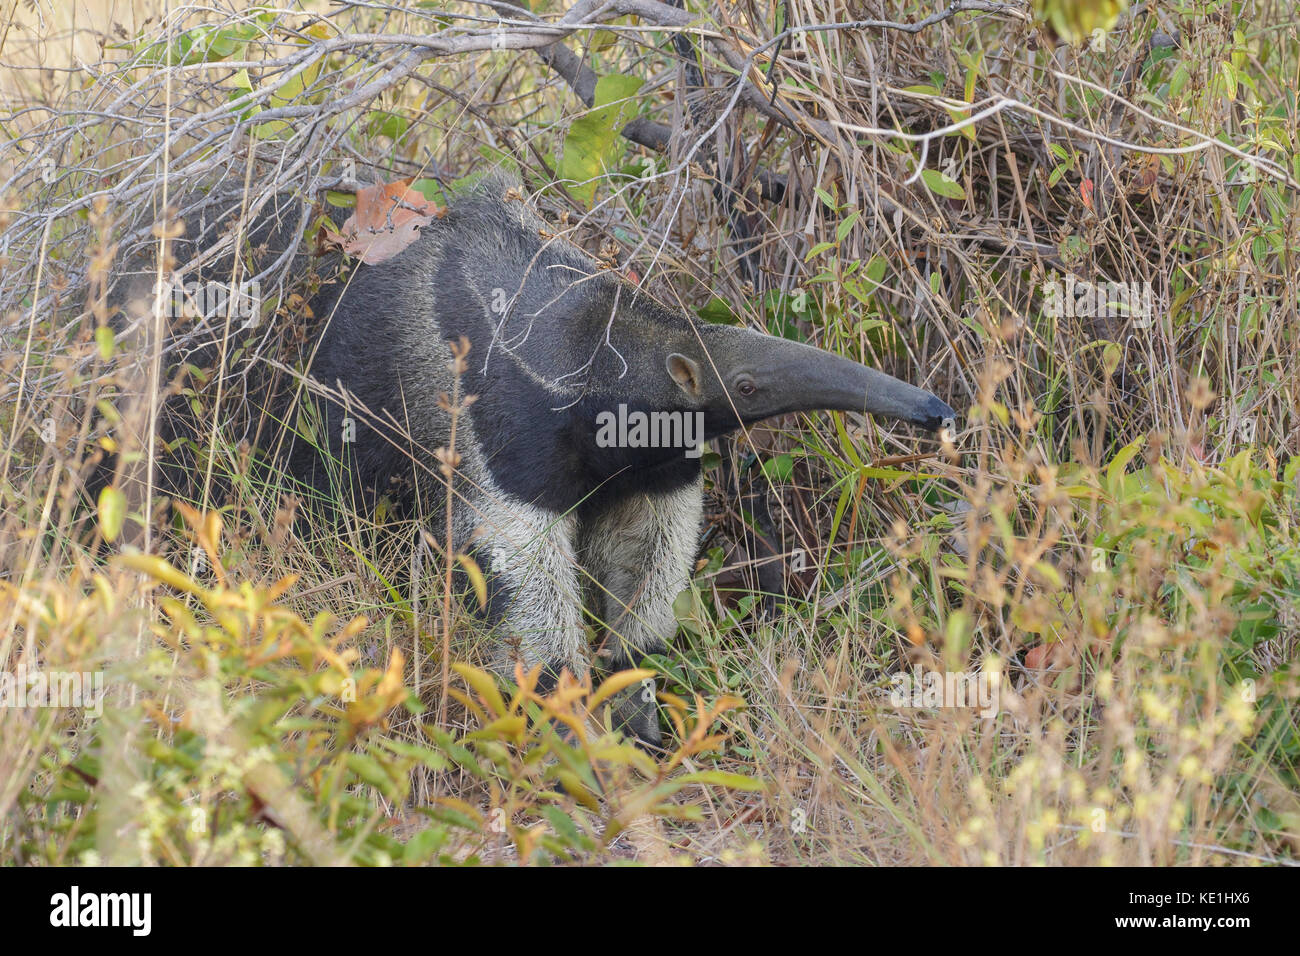 Giant Anteater nelle praterie della Guyana Foto Stock